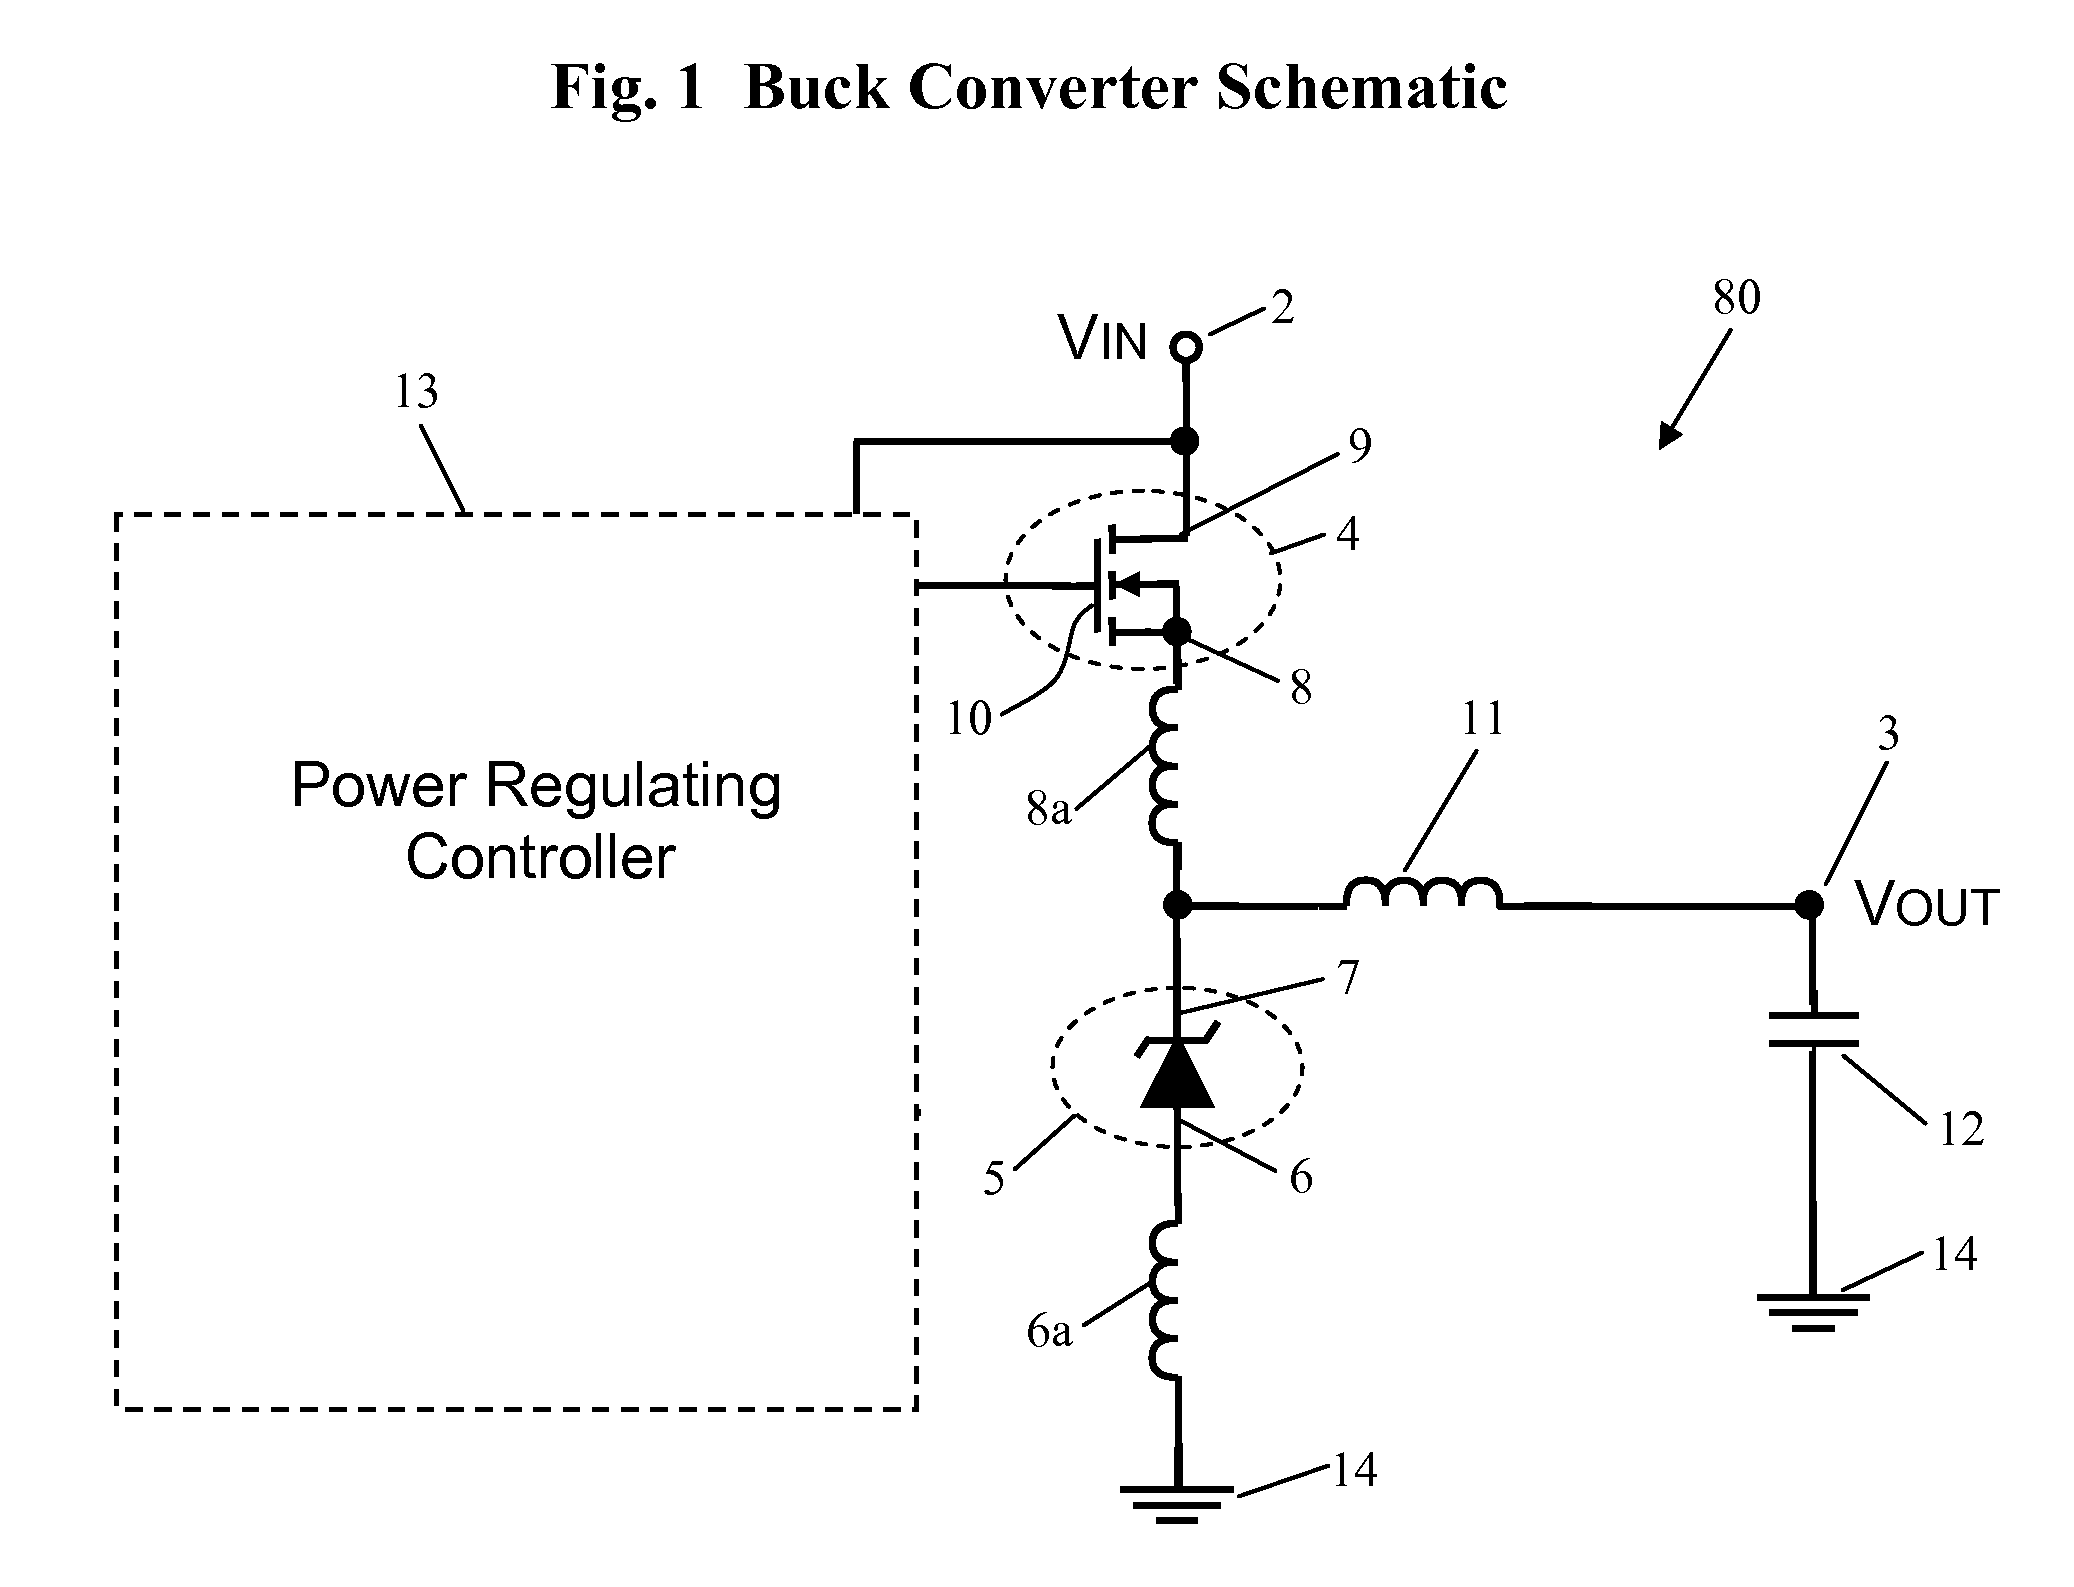 Multi-die DC-DC buck power converter with efficient packaging